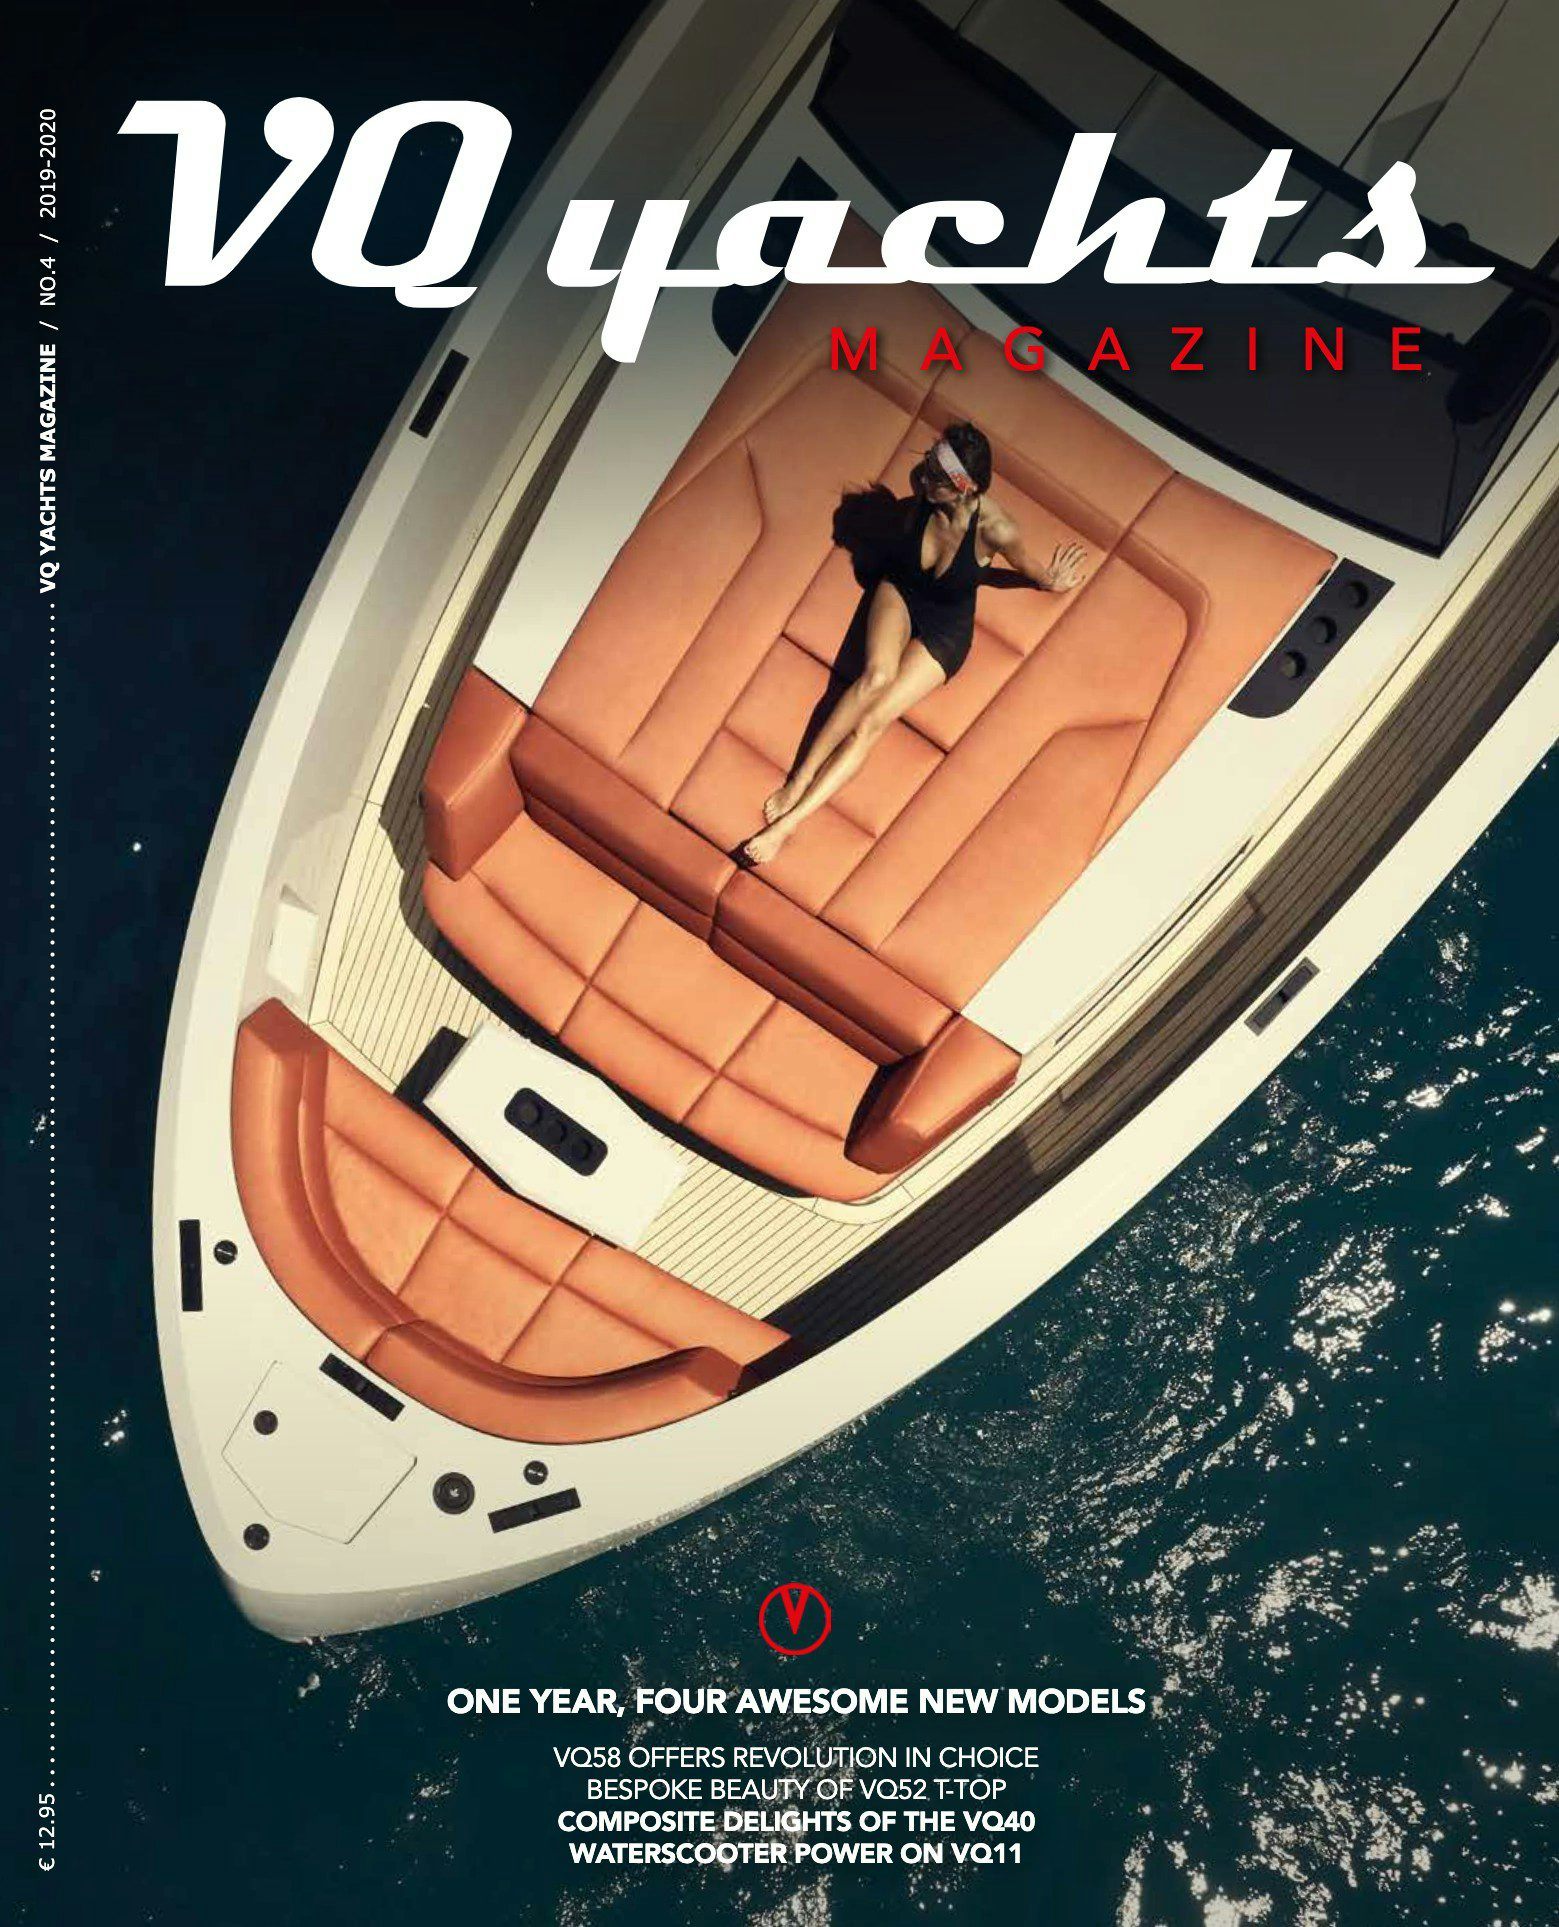 Vanquish lifestyle magazine cover 2019/2020